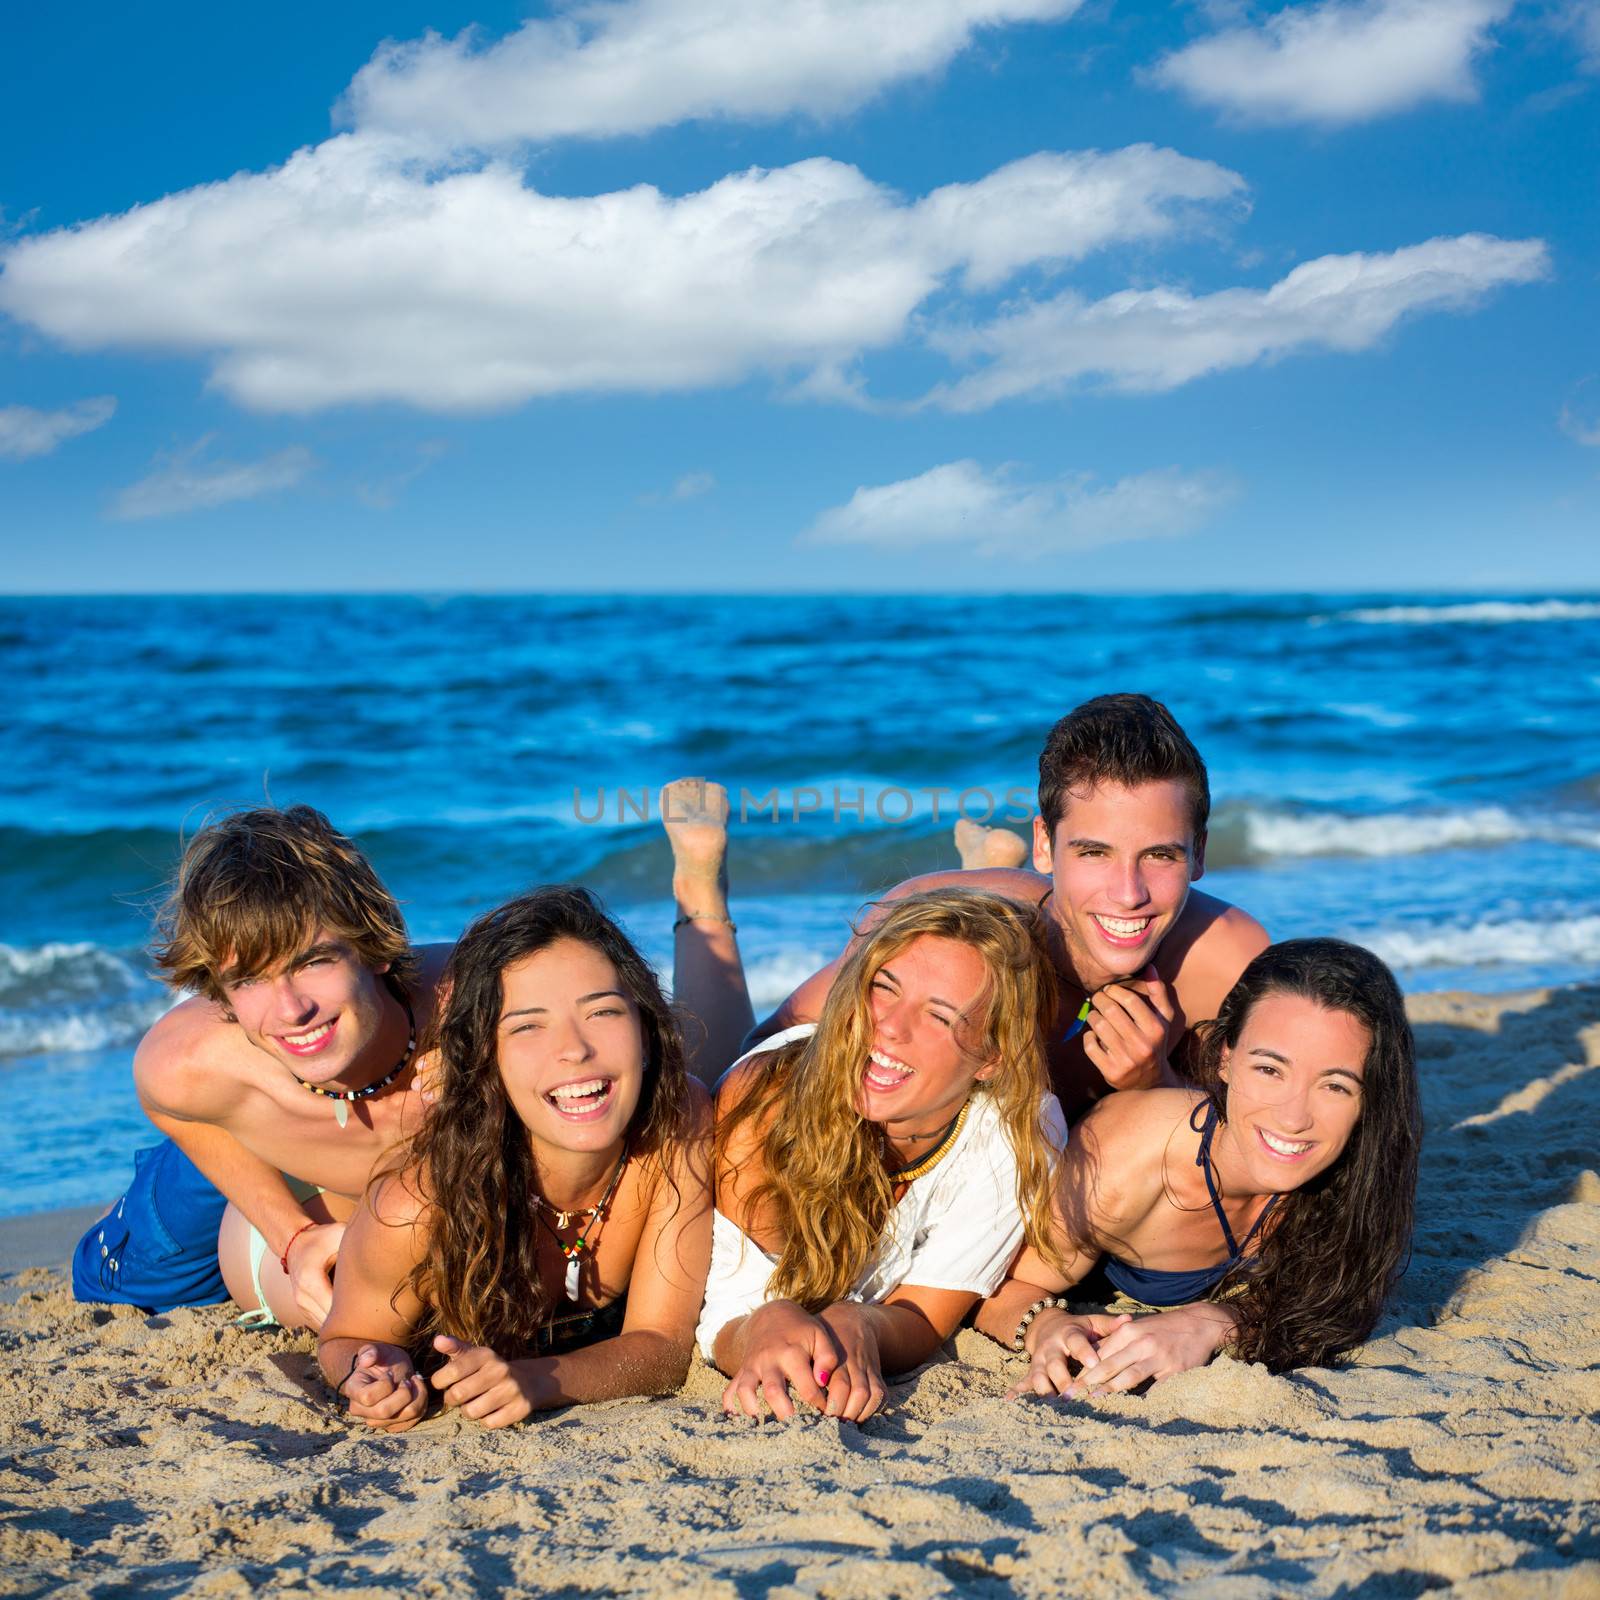 Boys and girls group having fun on the beach by lunamarina